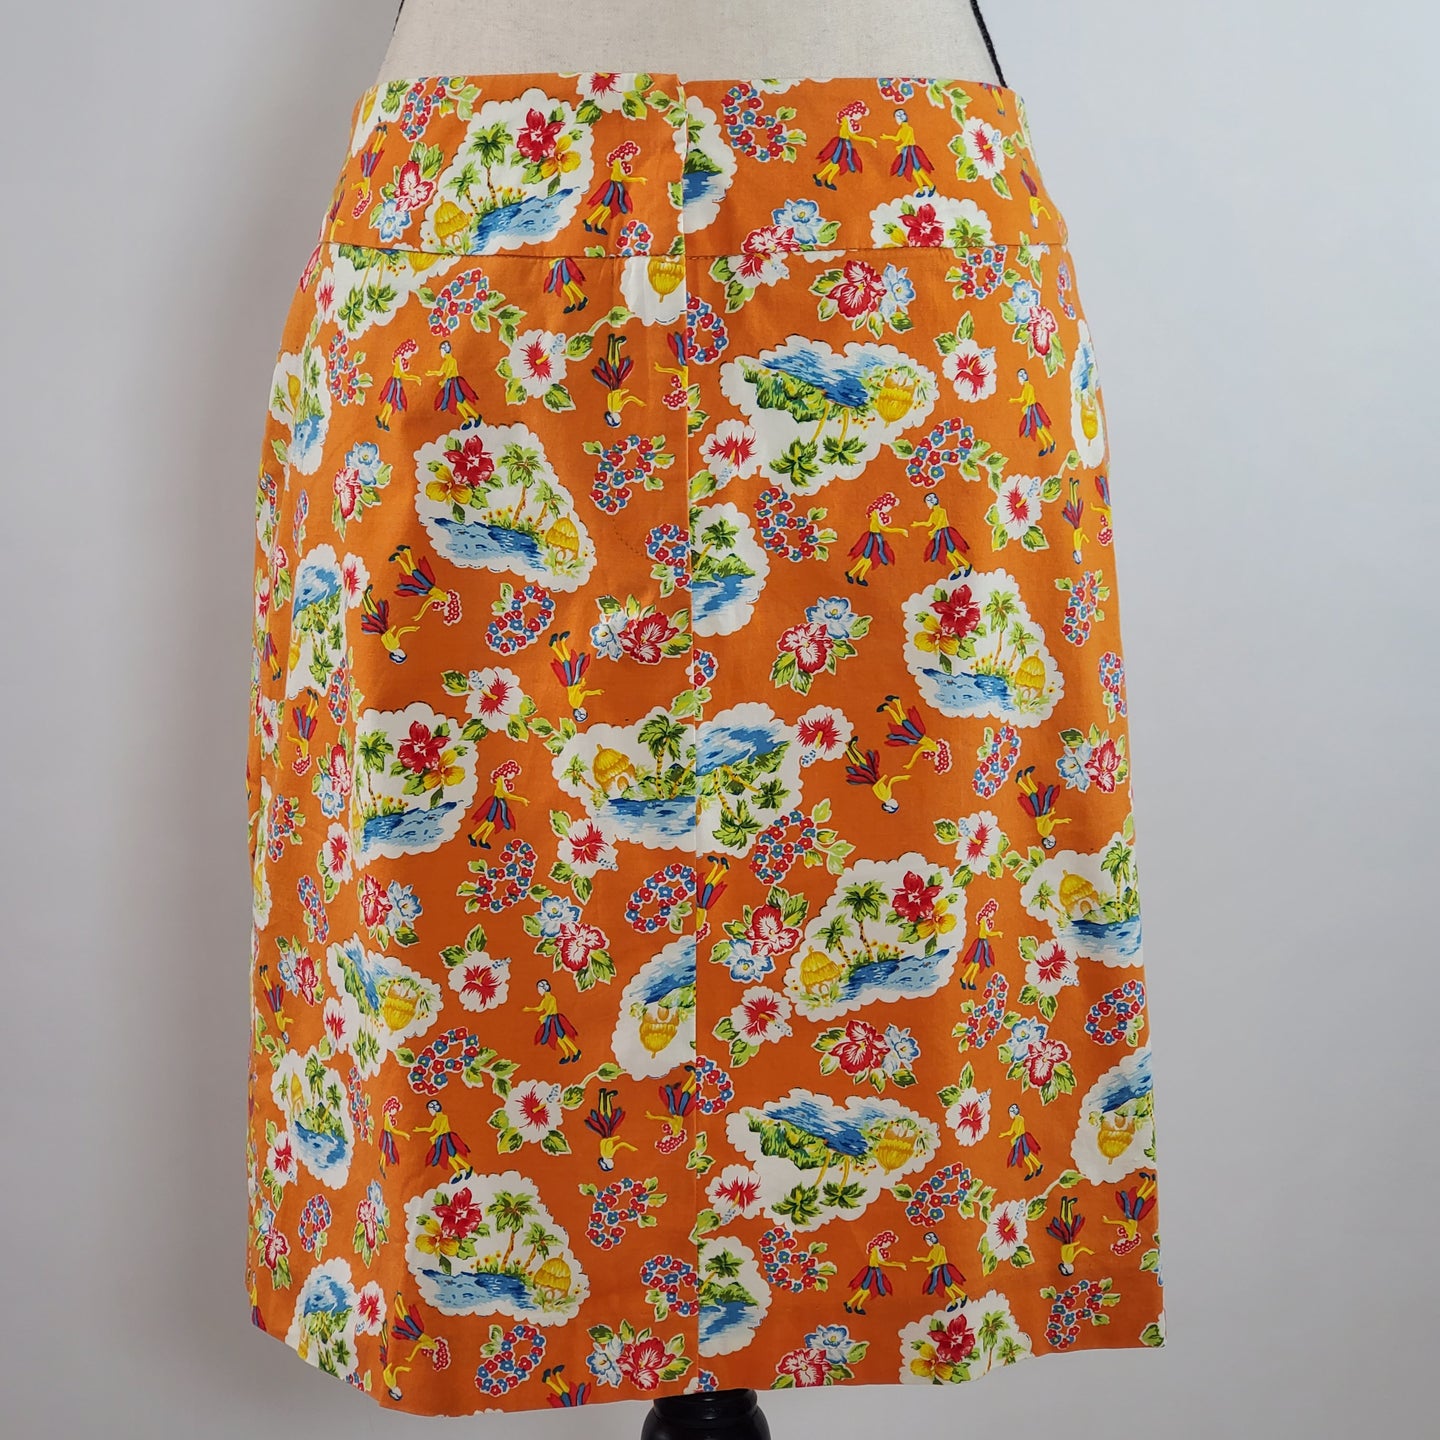 Vintage Hawiian Hula Print Skirt Size 8, Made in USA